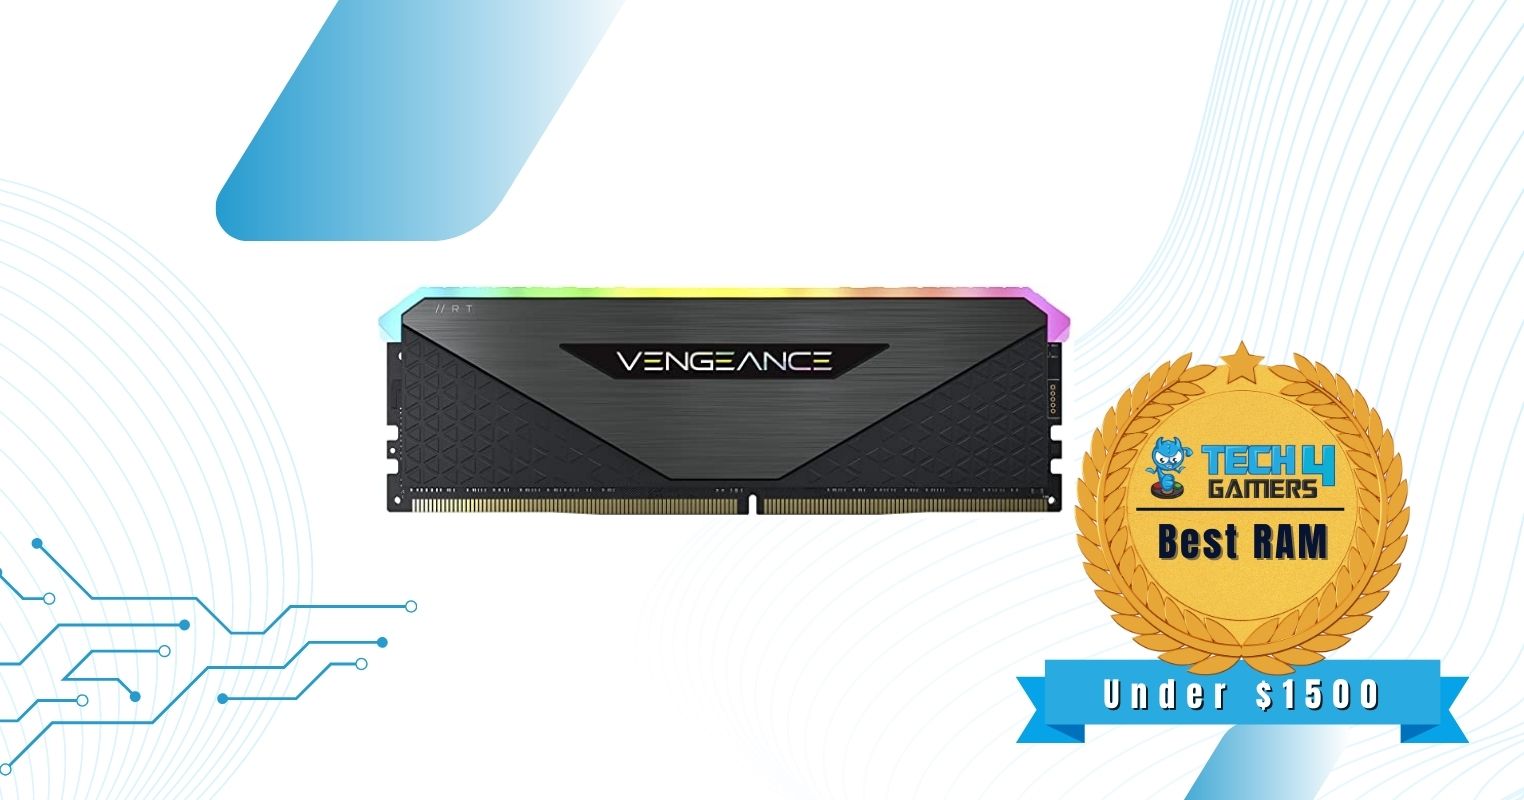 CORSAIR Vengeance RGB RT 32GB (2x16GB) DDR4 3600 C16 - Best $1500 Gaming PC Build Processor